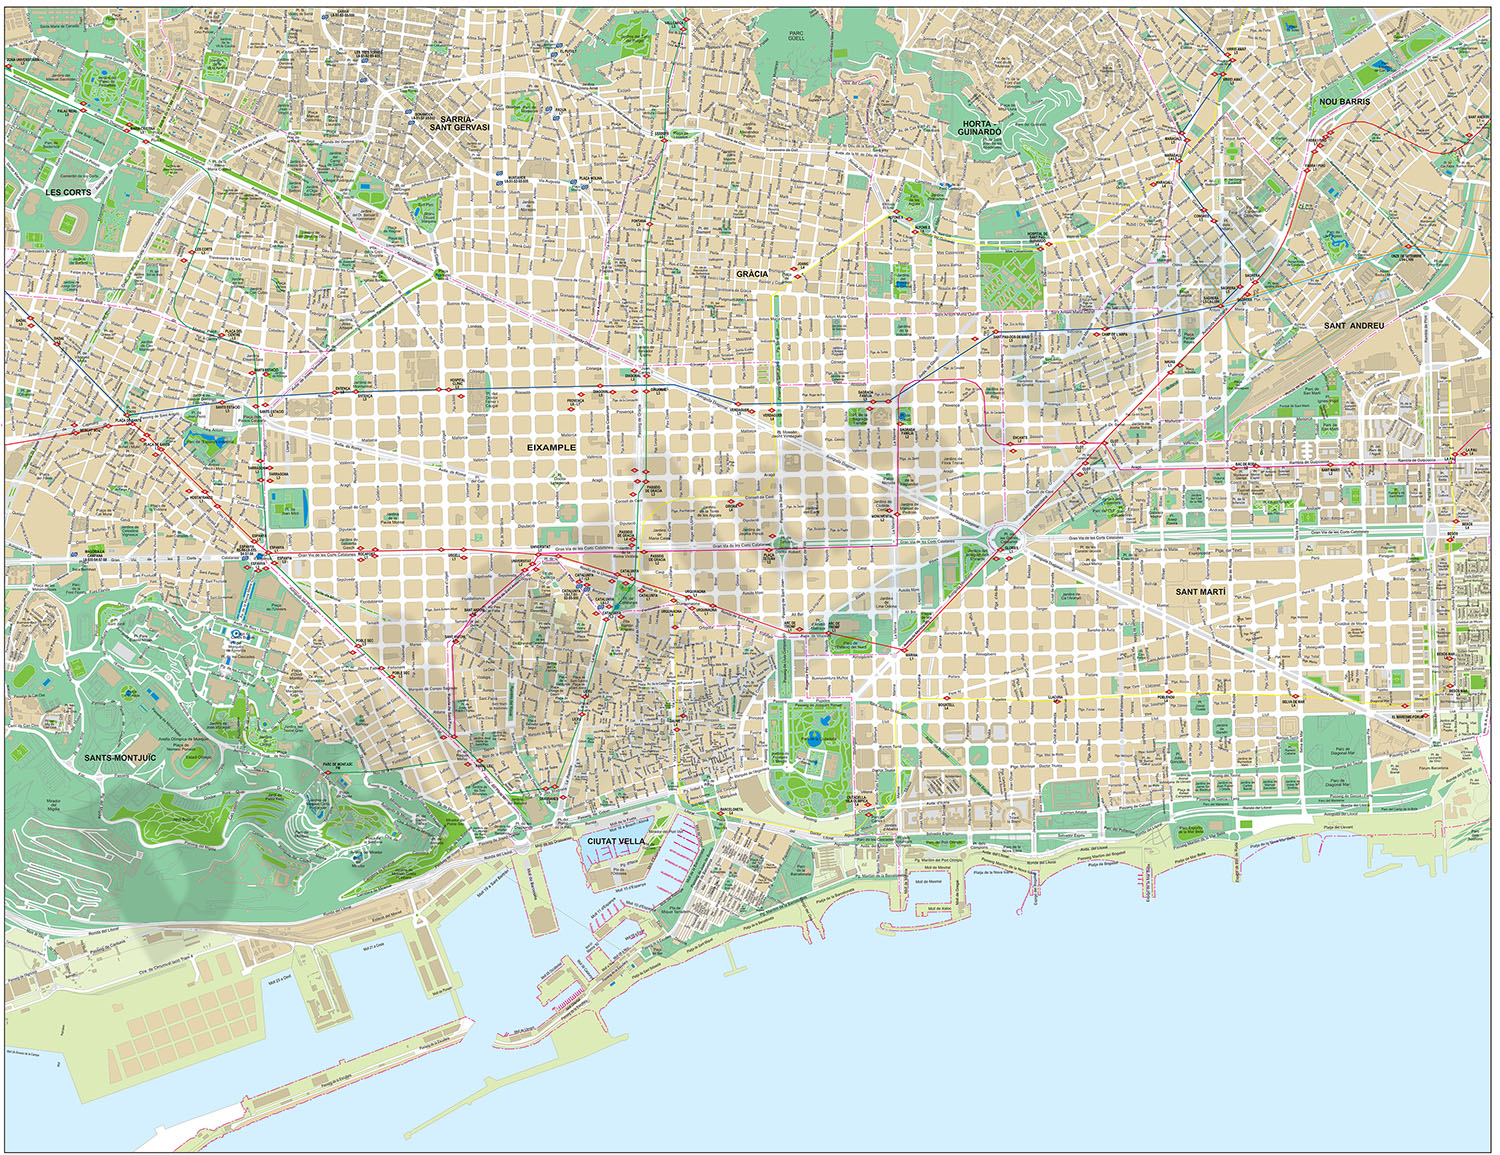 Barcelona city map (raster file)